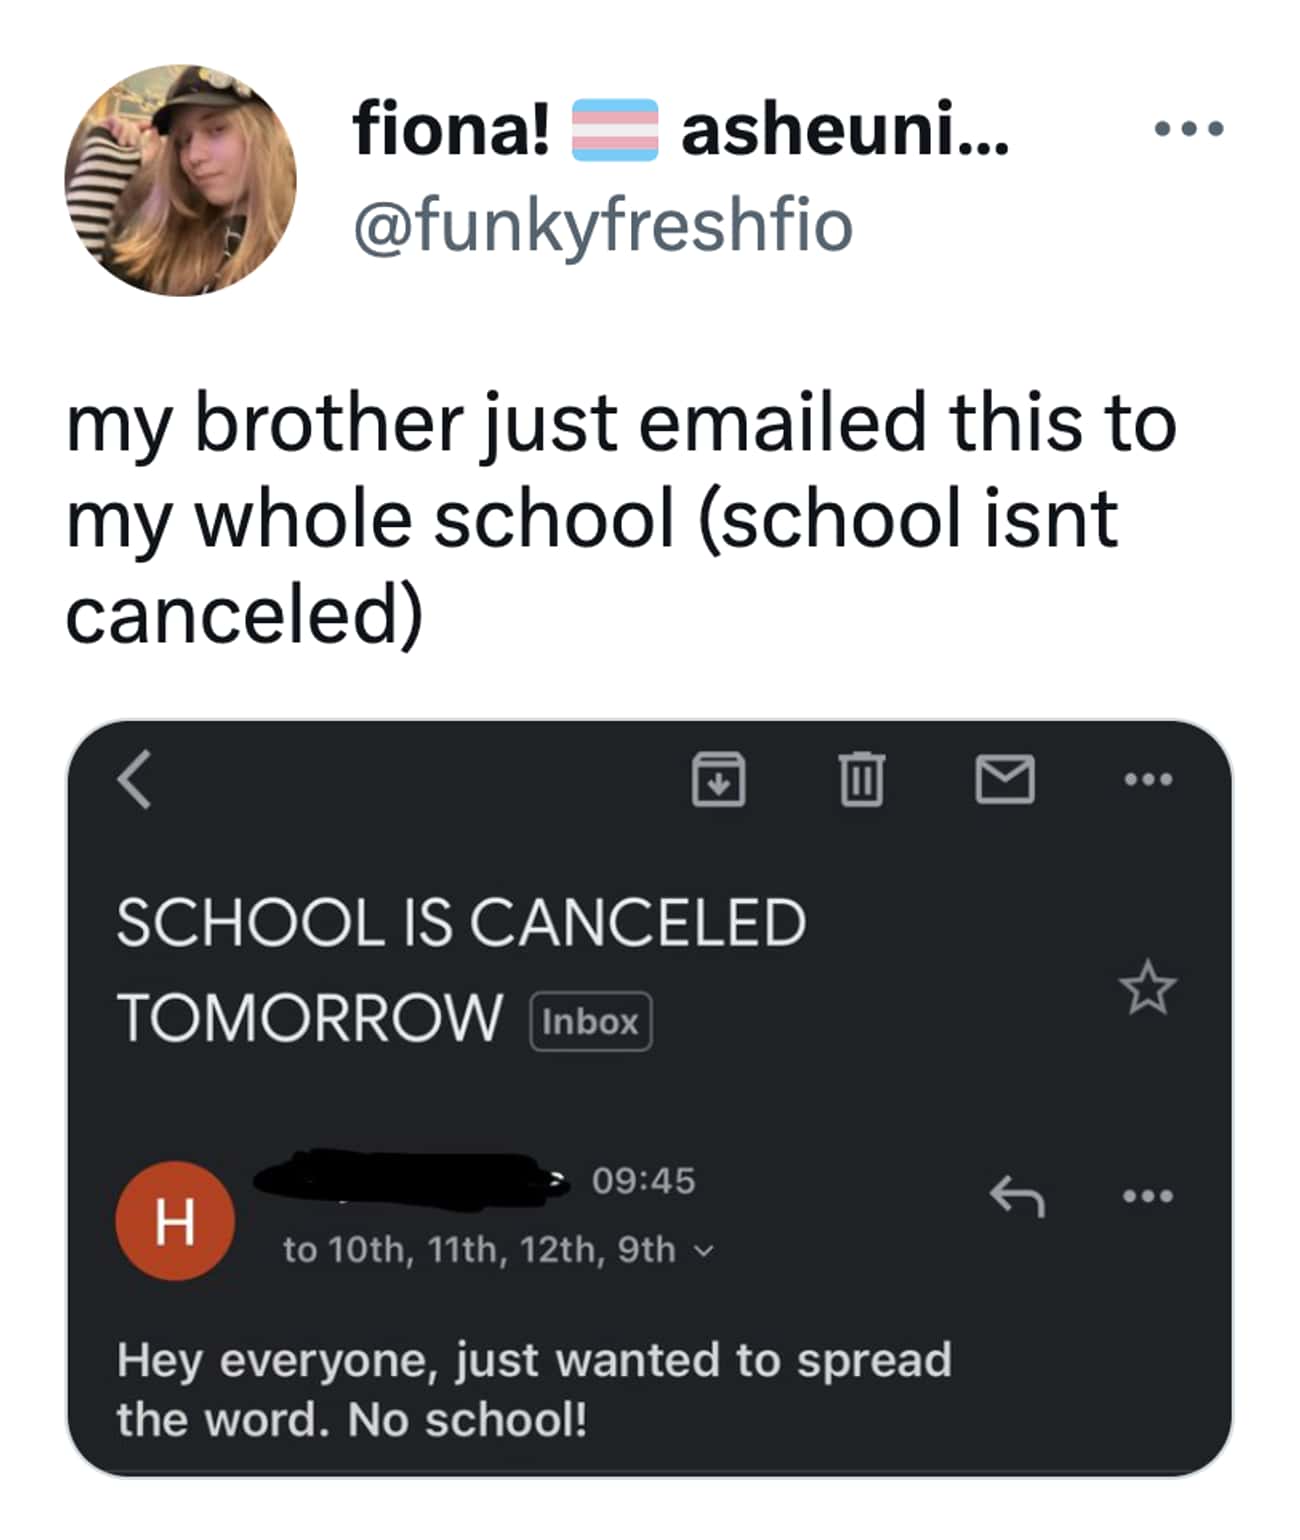 oversharing twitter - emailed whole school canceled